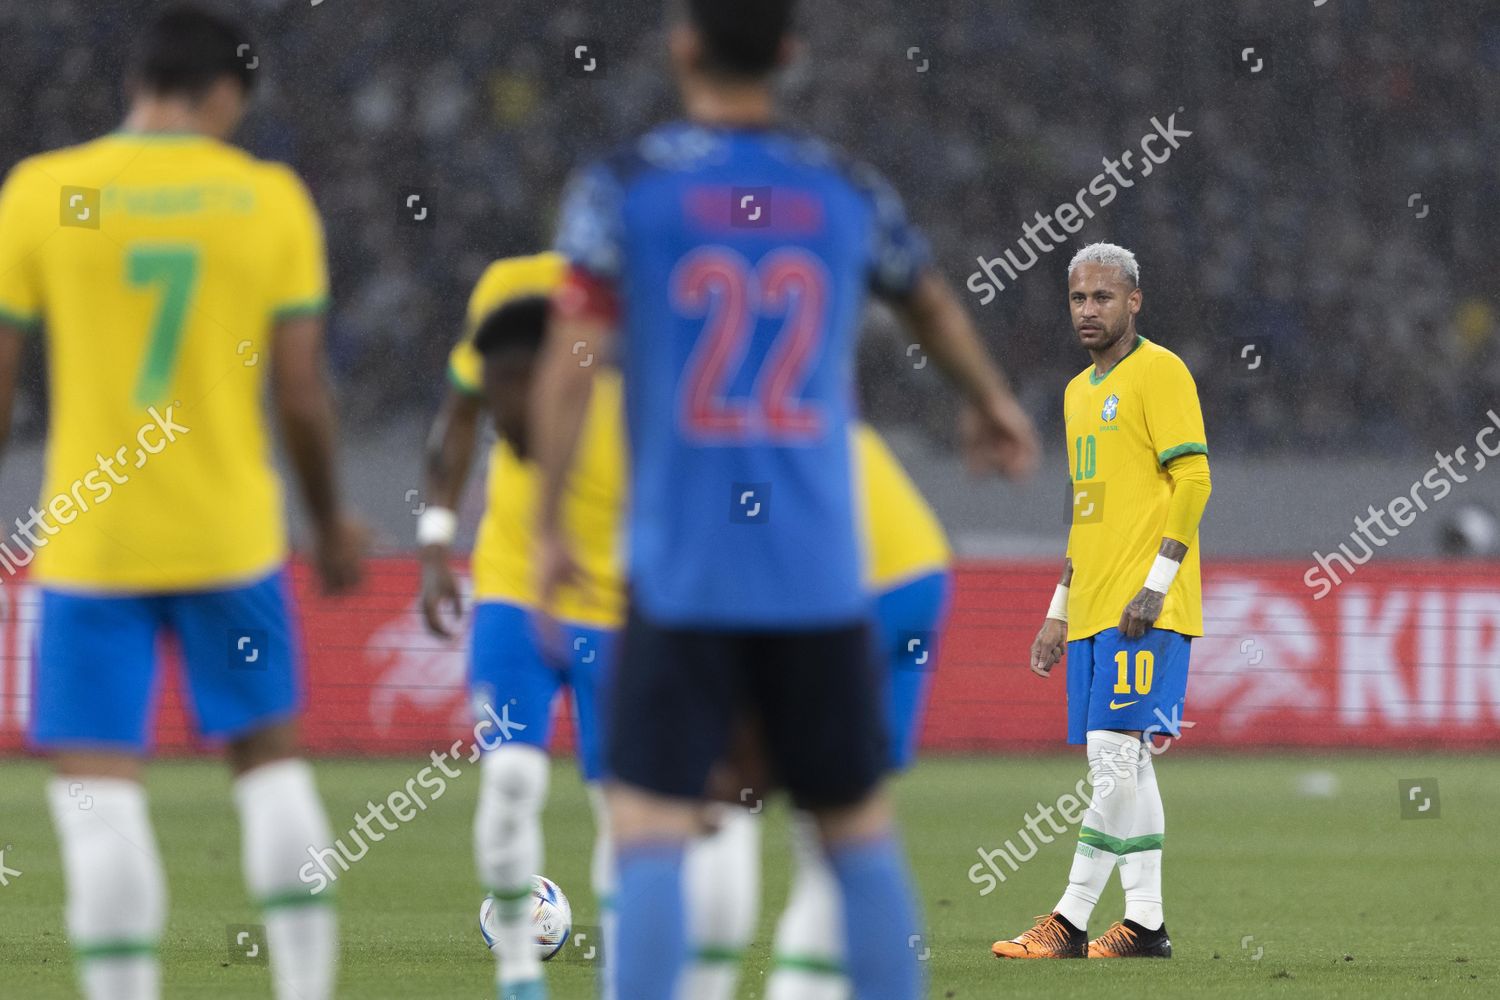 Neymar Jr Bra Football Soccer Kirin Editorial Stock Photo - Stock Image